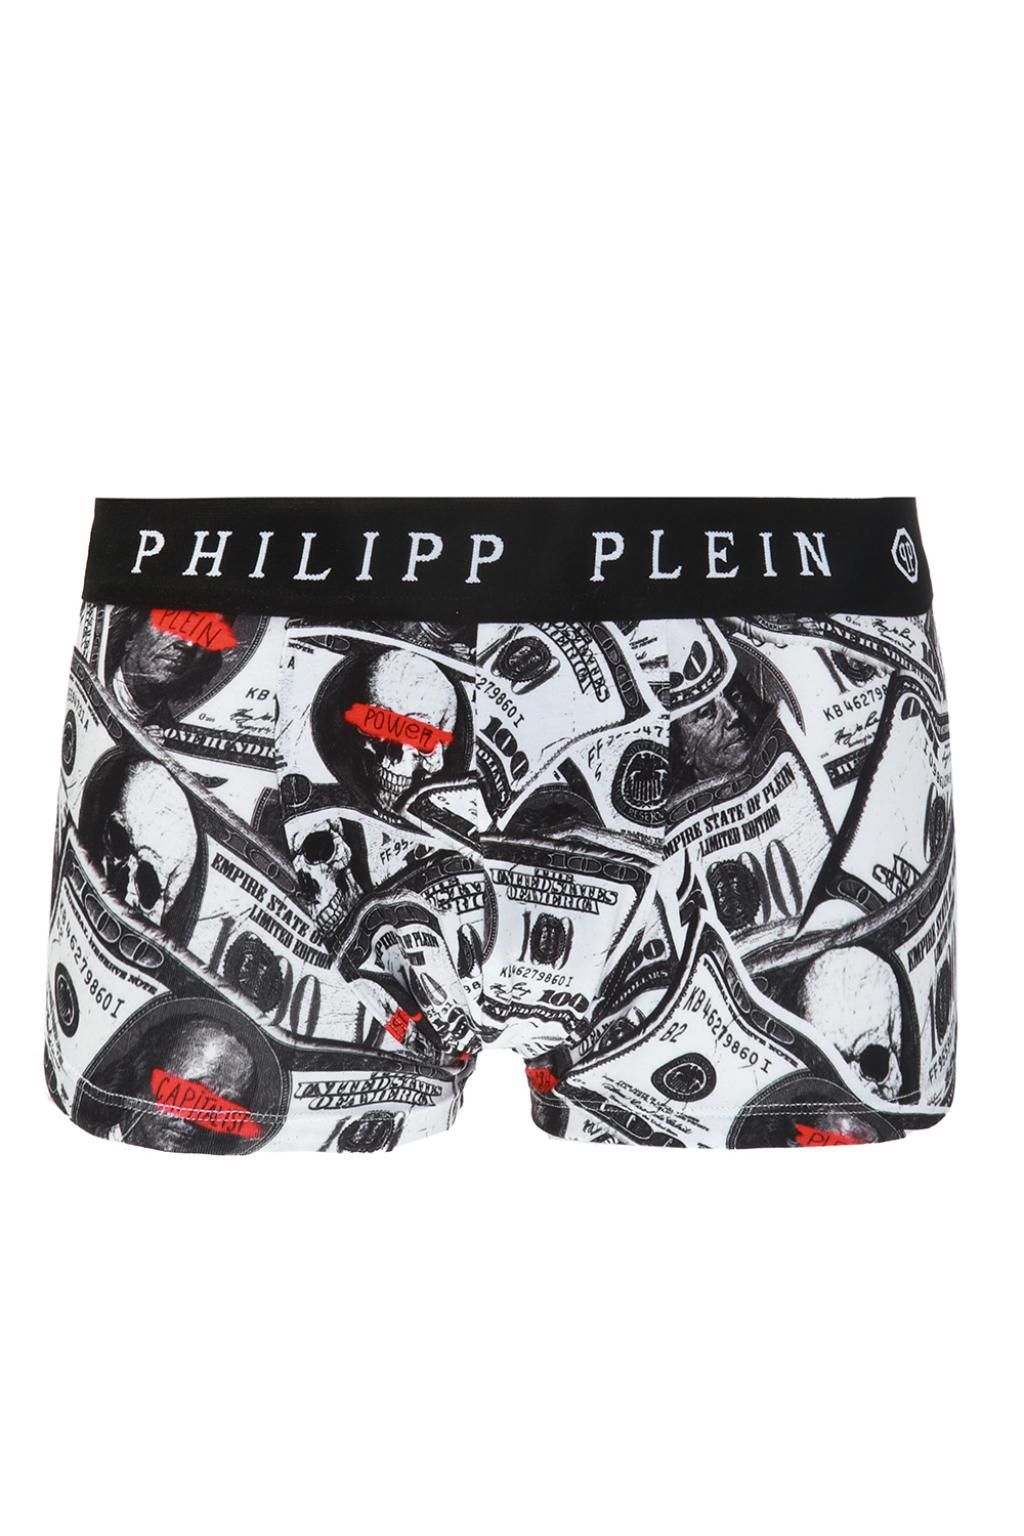  Philipp Plein Boxers S : Clothing, Shoes & Jewelry